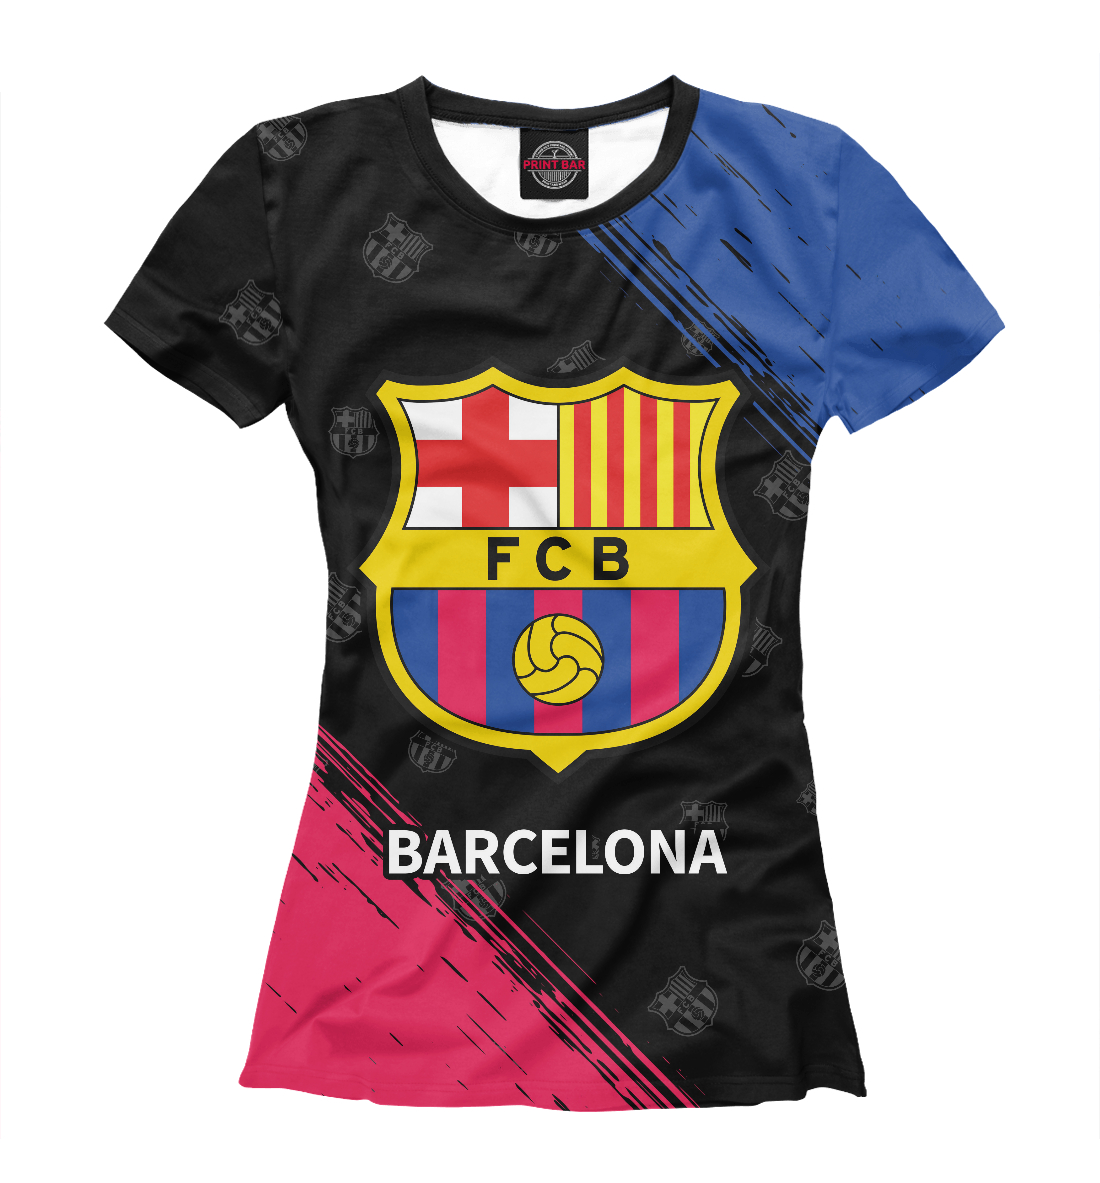 Футболка Barcelona / Барселона для женщин, артикул: BAR-420222-fut-1mp